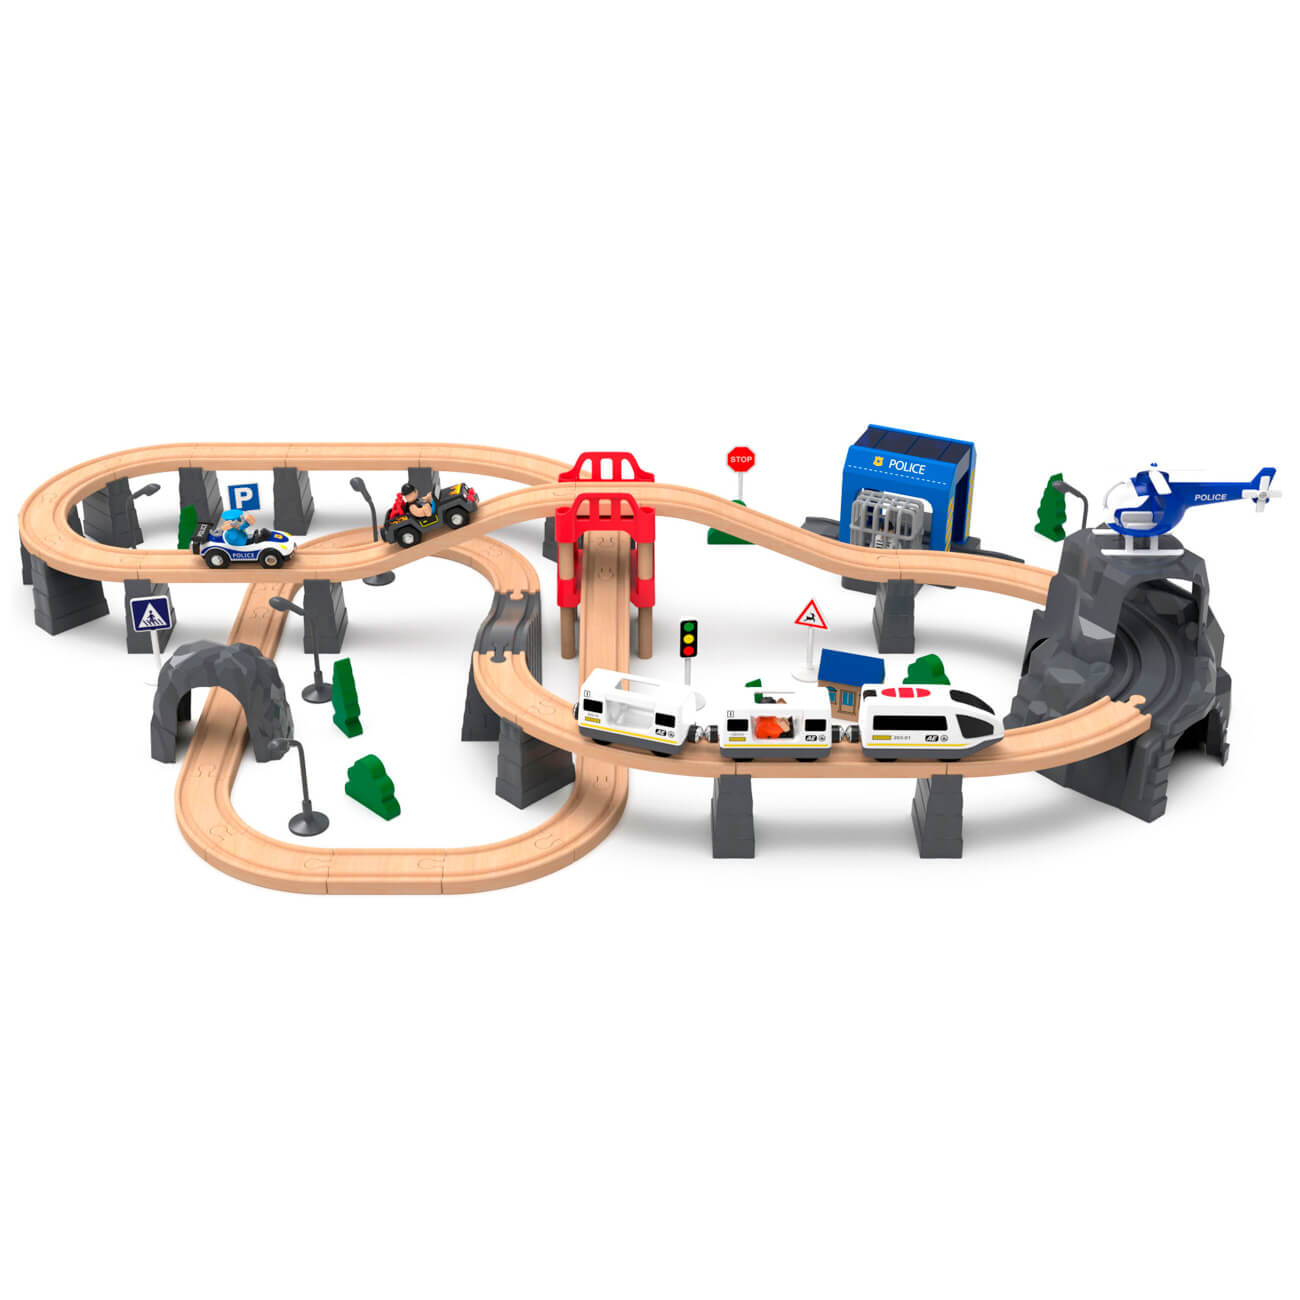 Железная дорога игрушечная, 98 см, дерево/пластик, Электропоезд, Game rail железная дорога игрушечная 28 см дерево город game